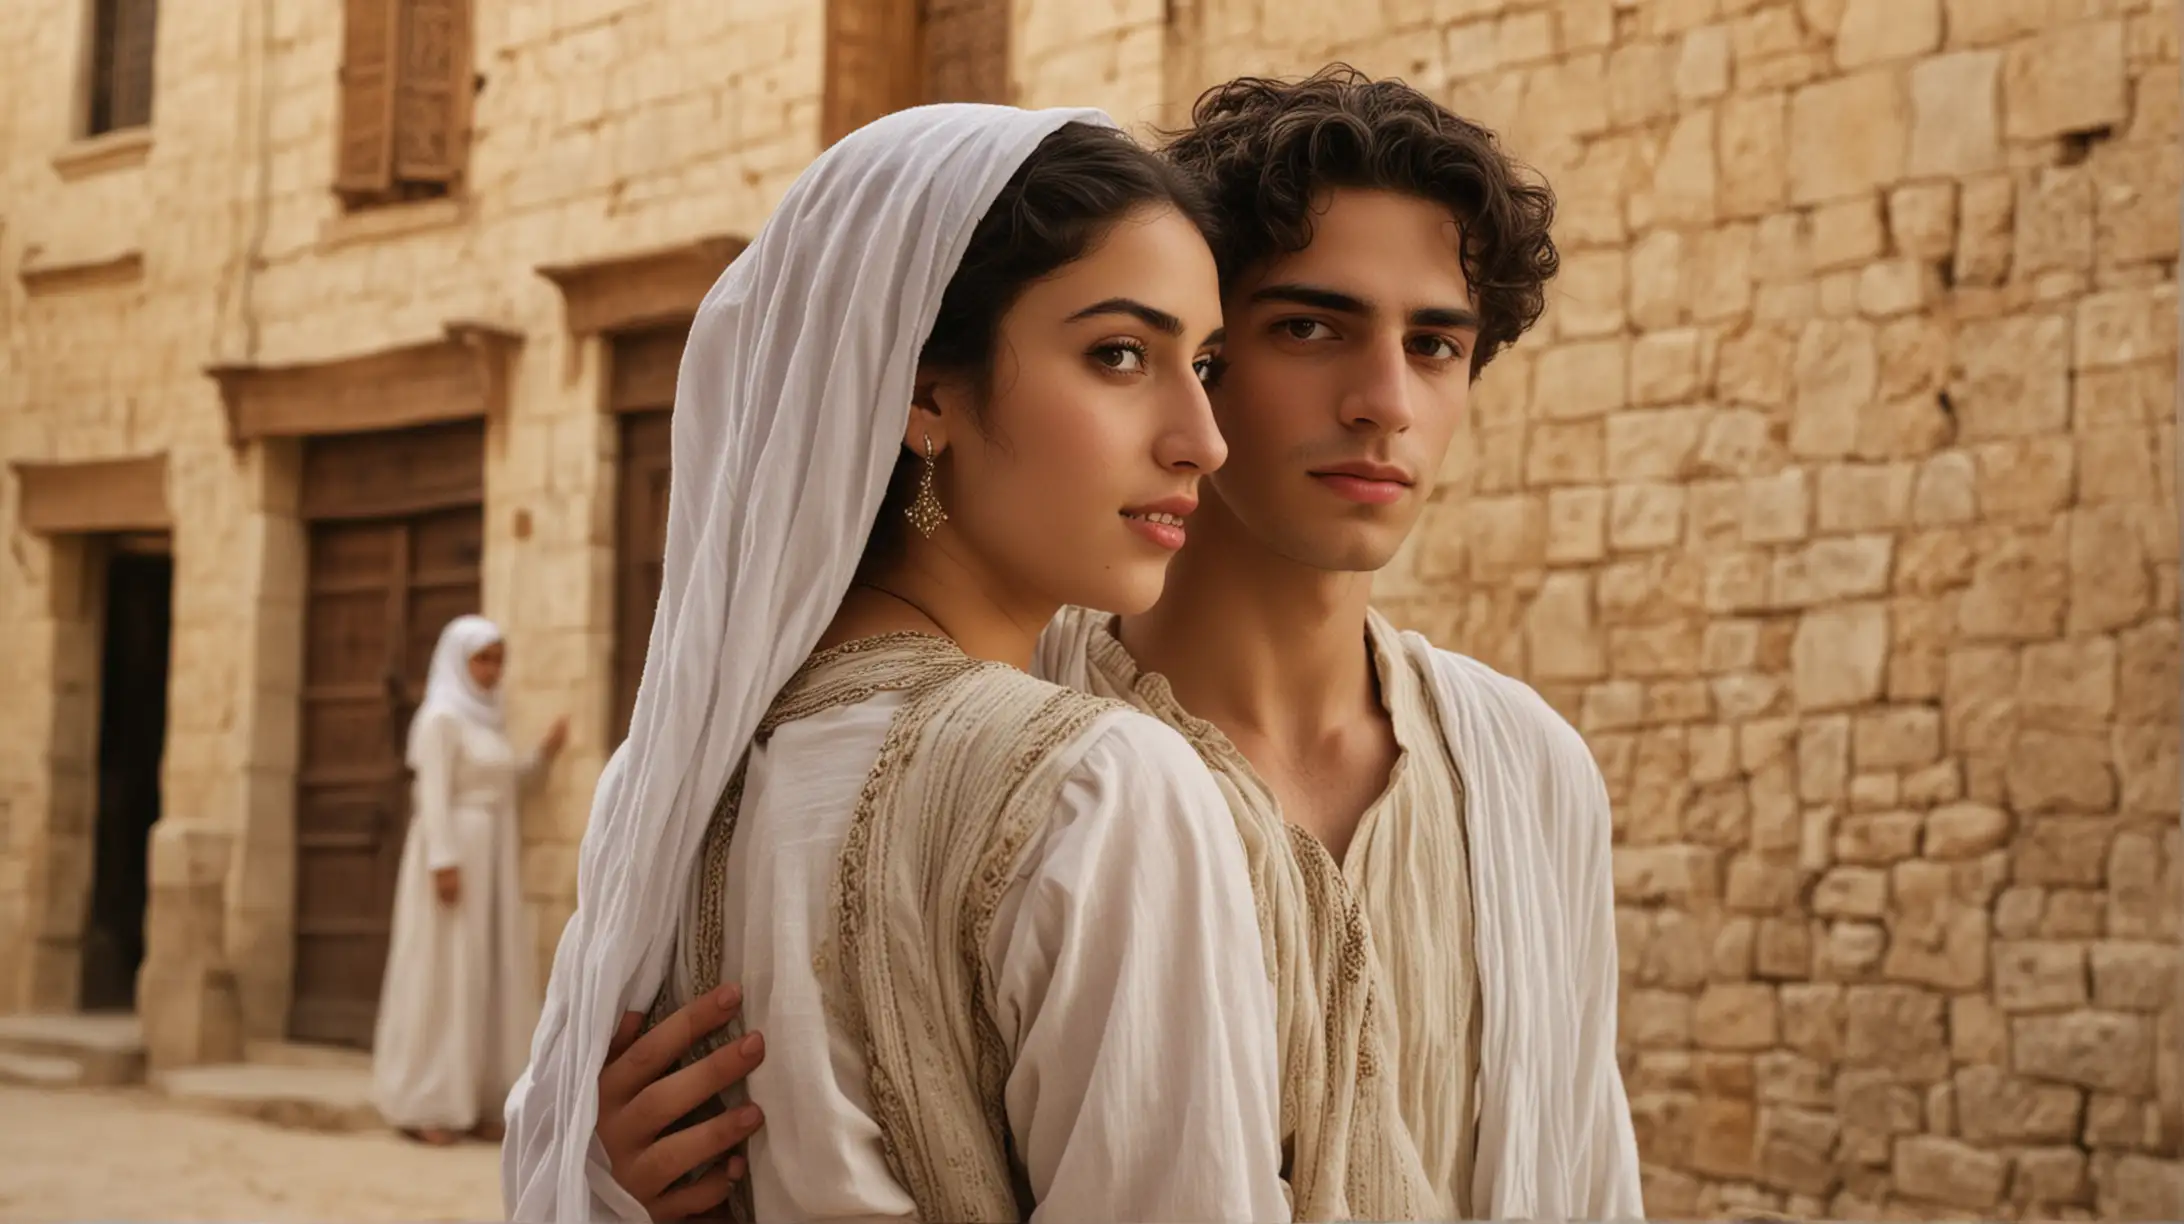 A young jewish man beside a beautiful arab woman in a town setting. Set during the Biblical era.